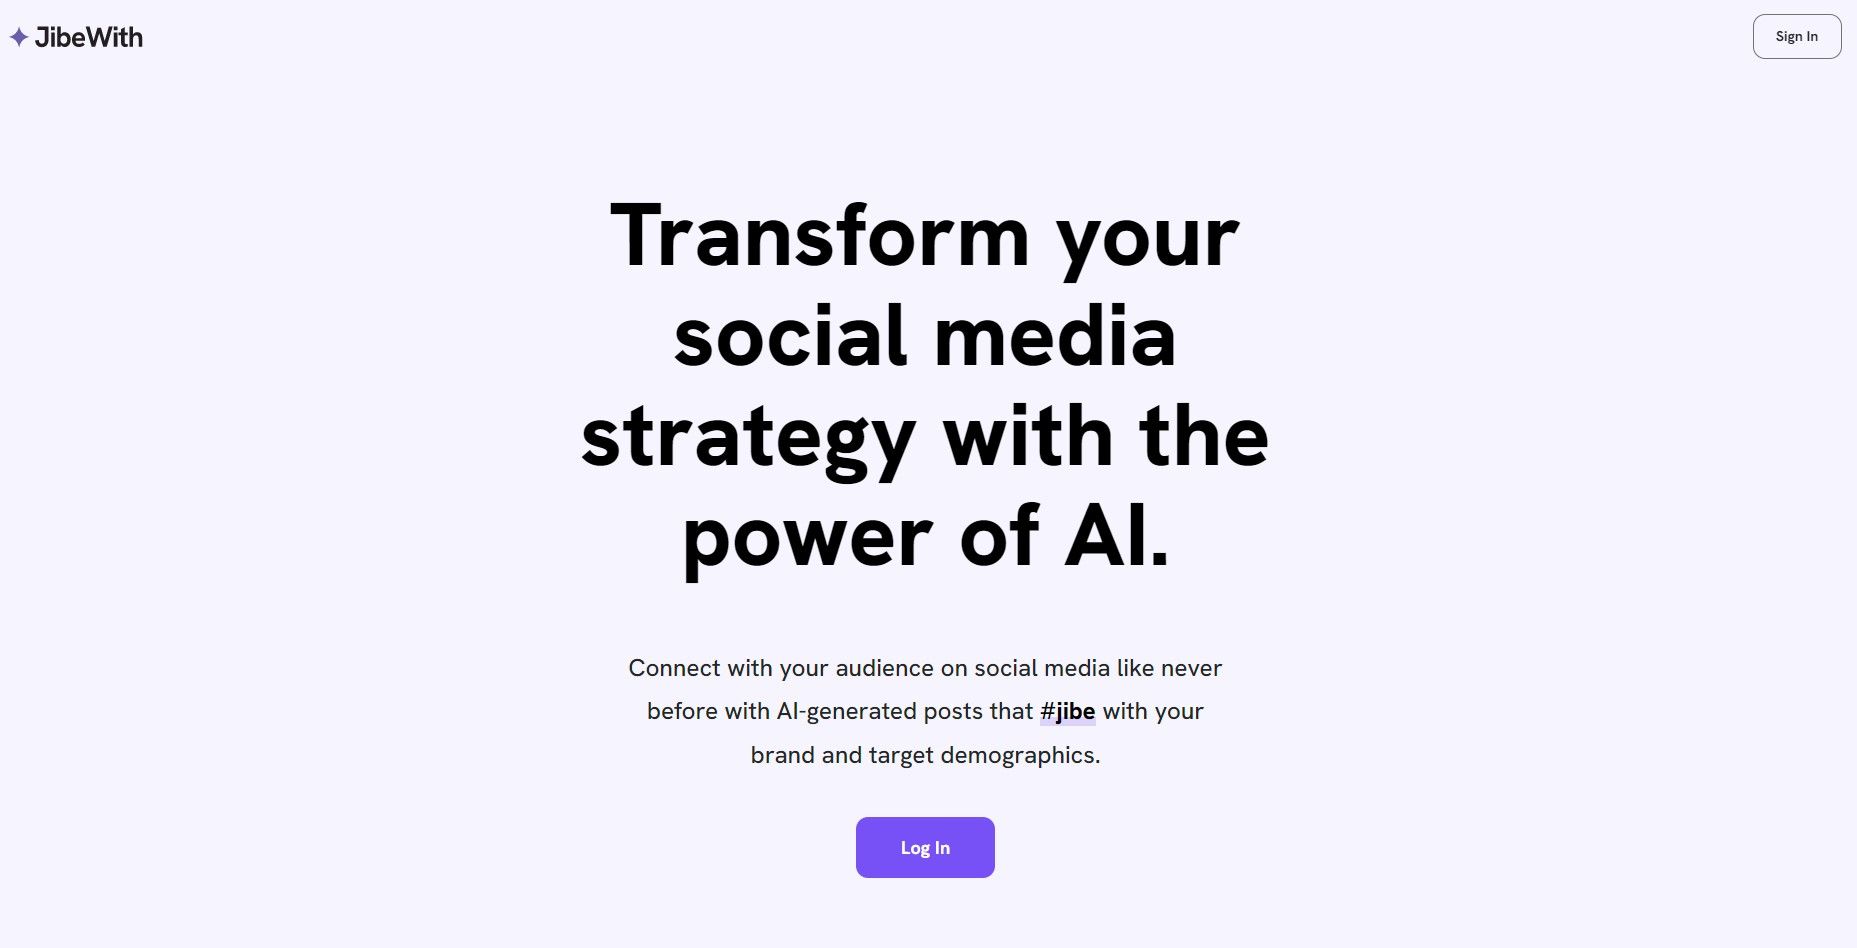 JibeWithArtificial intelligence creates short social media posts using advanced language